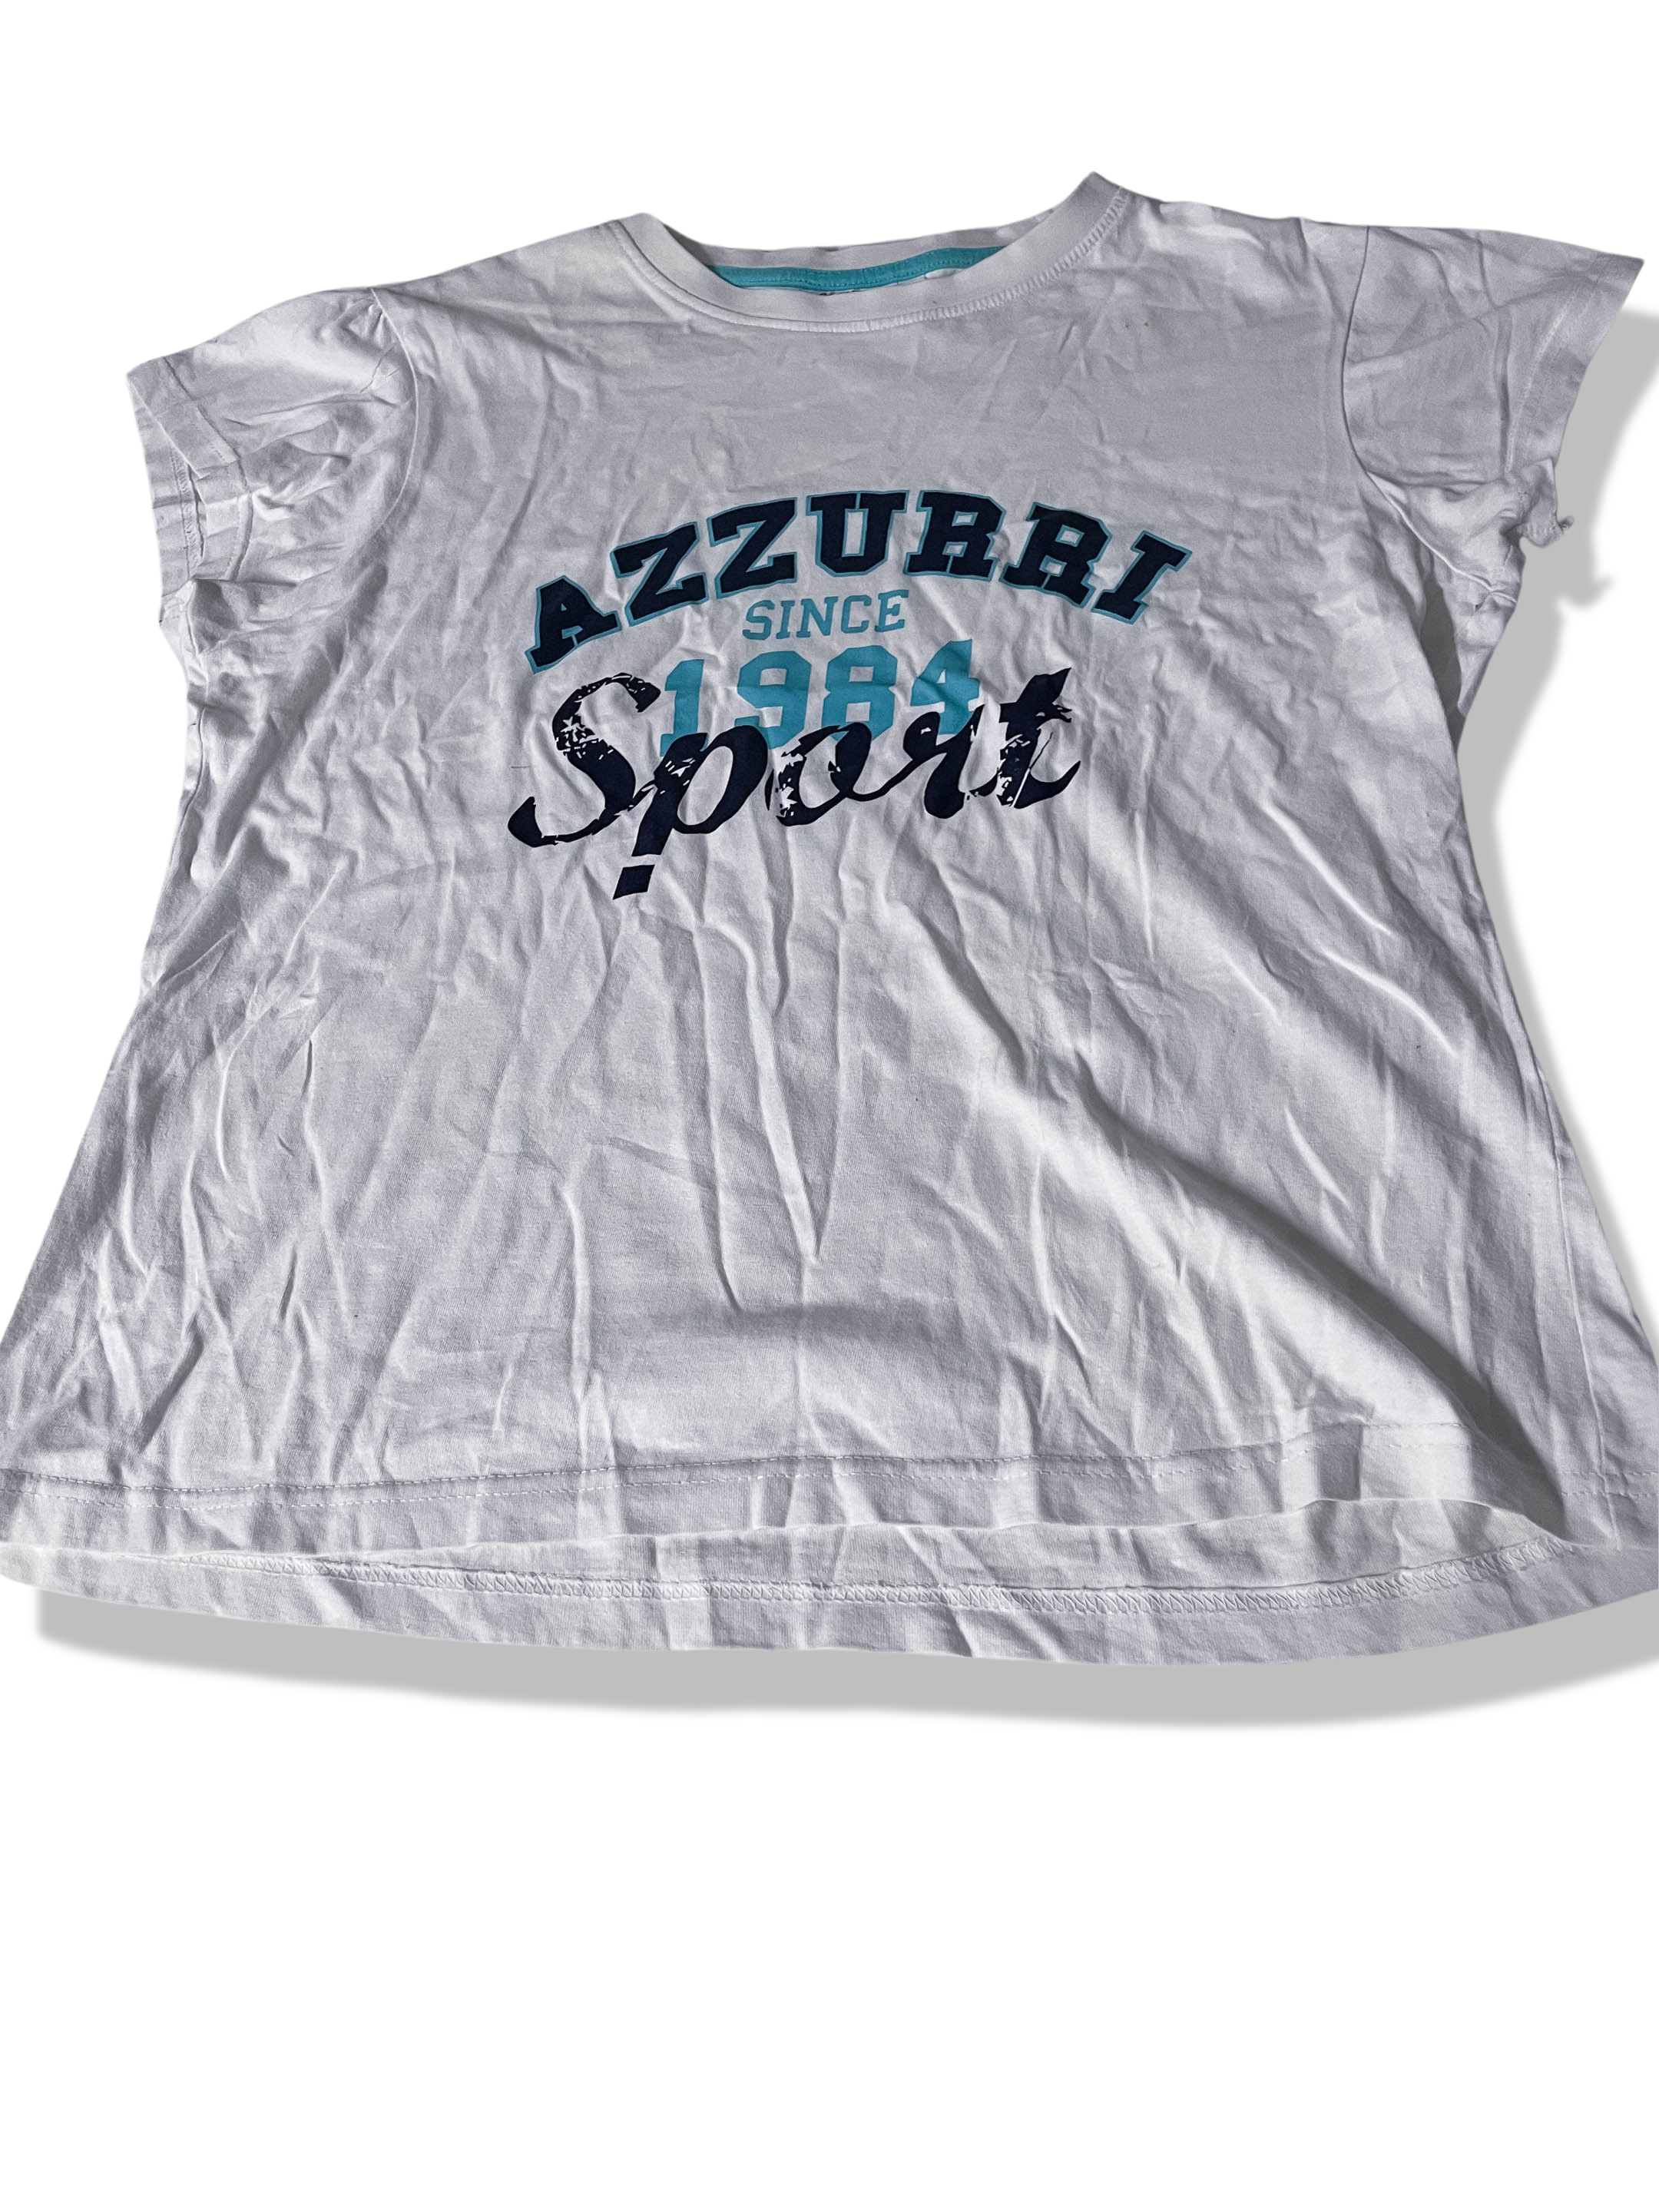 Vintage white womens Azzuri sport large tees